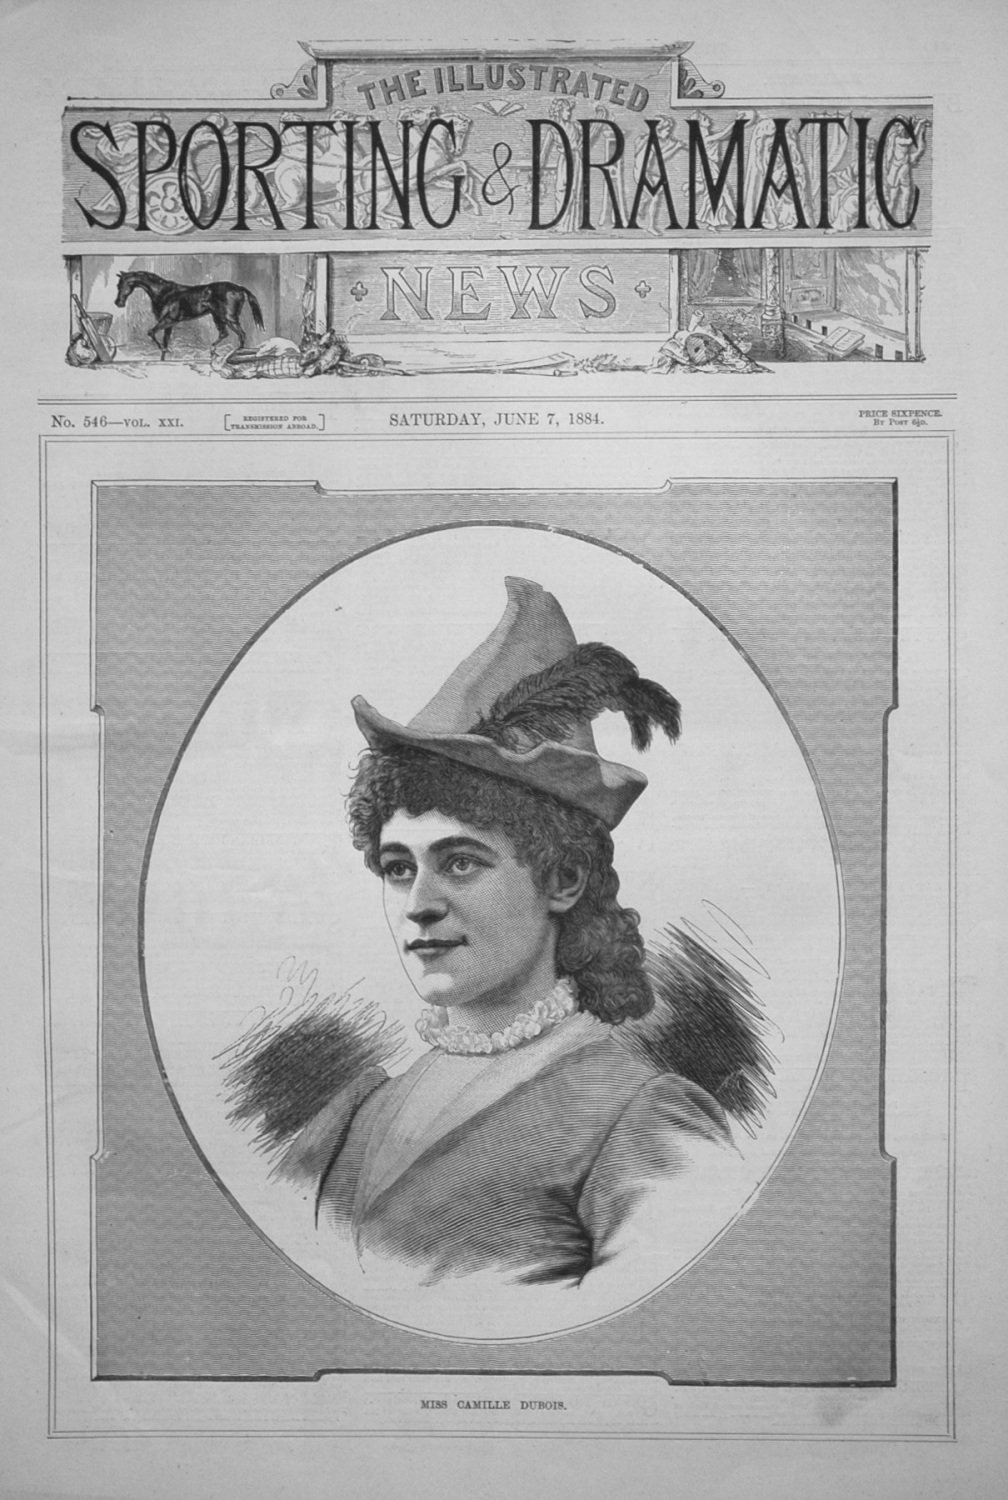 Miss Camille Dubois. 1884